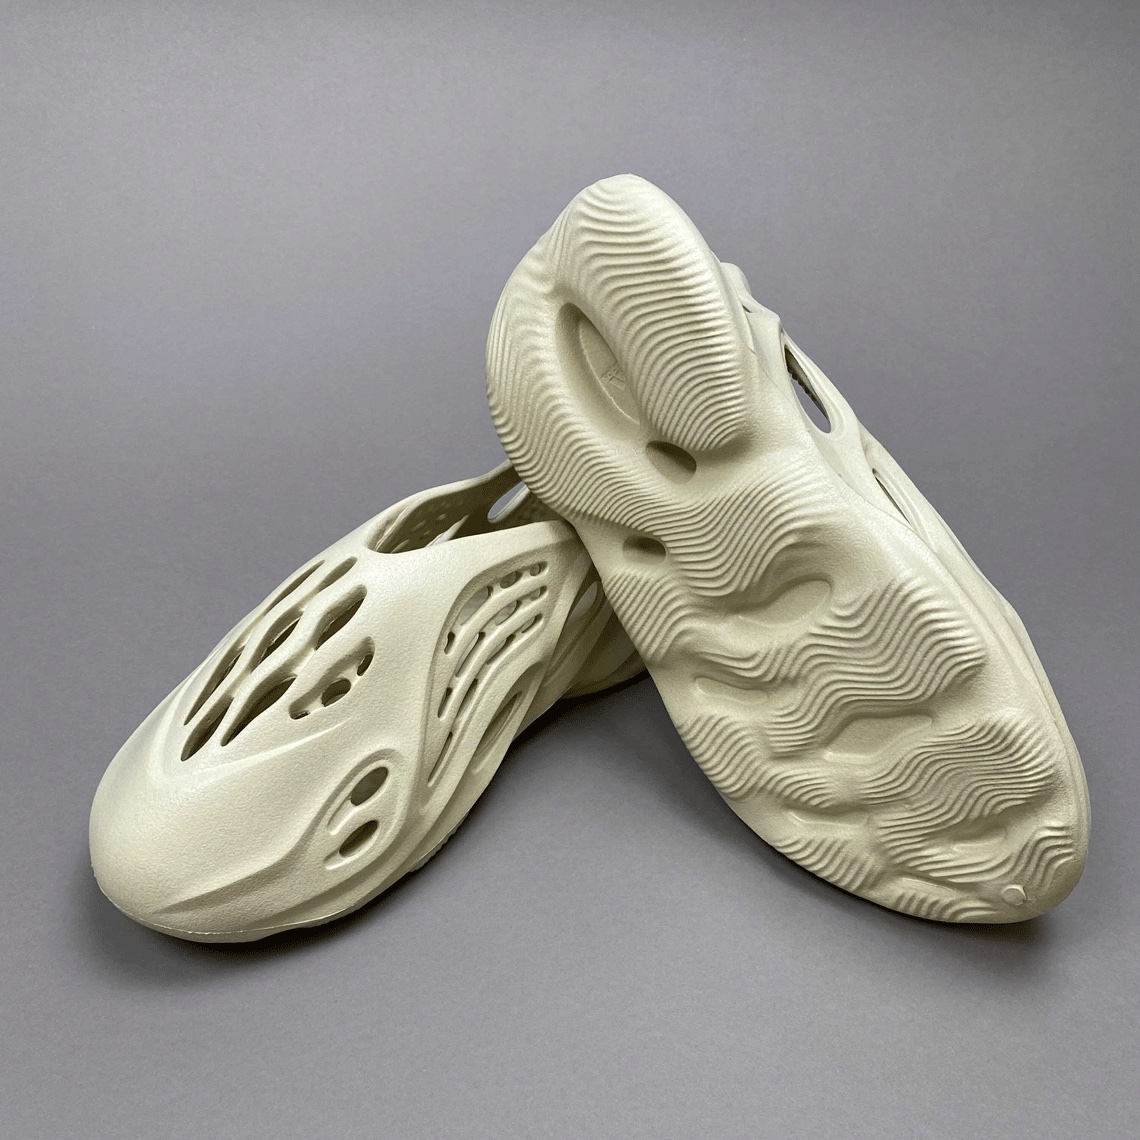 adidas Yeezy Foam Runner "Sand" Release Date